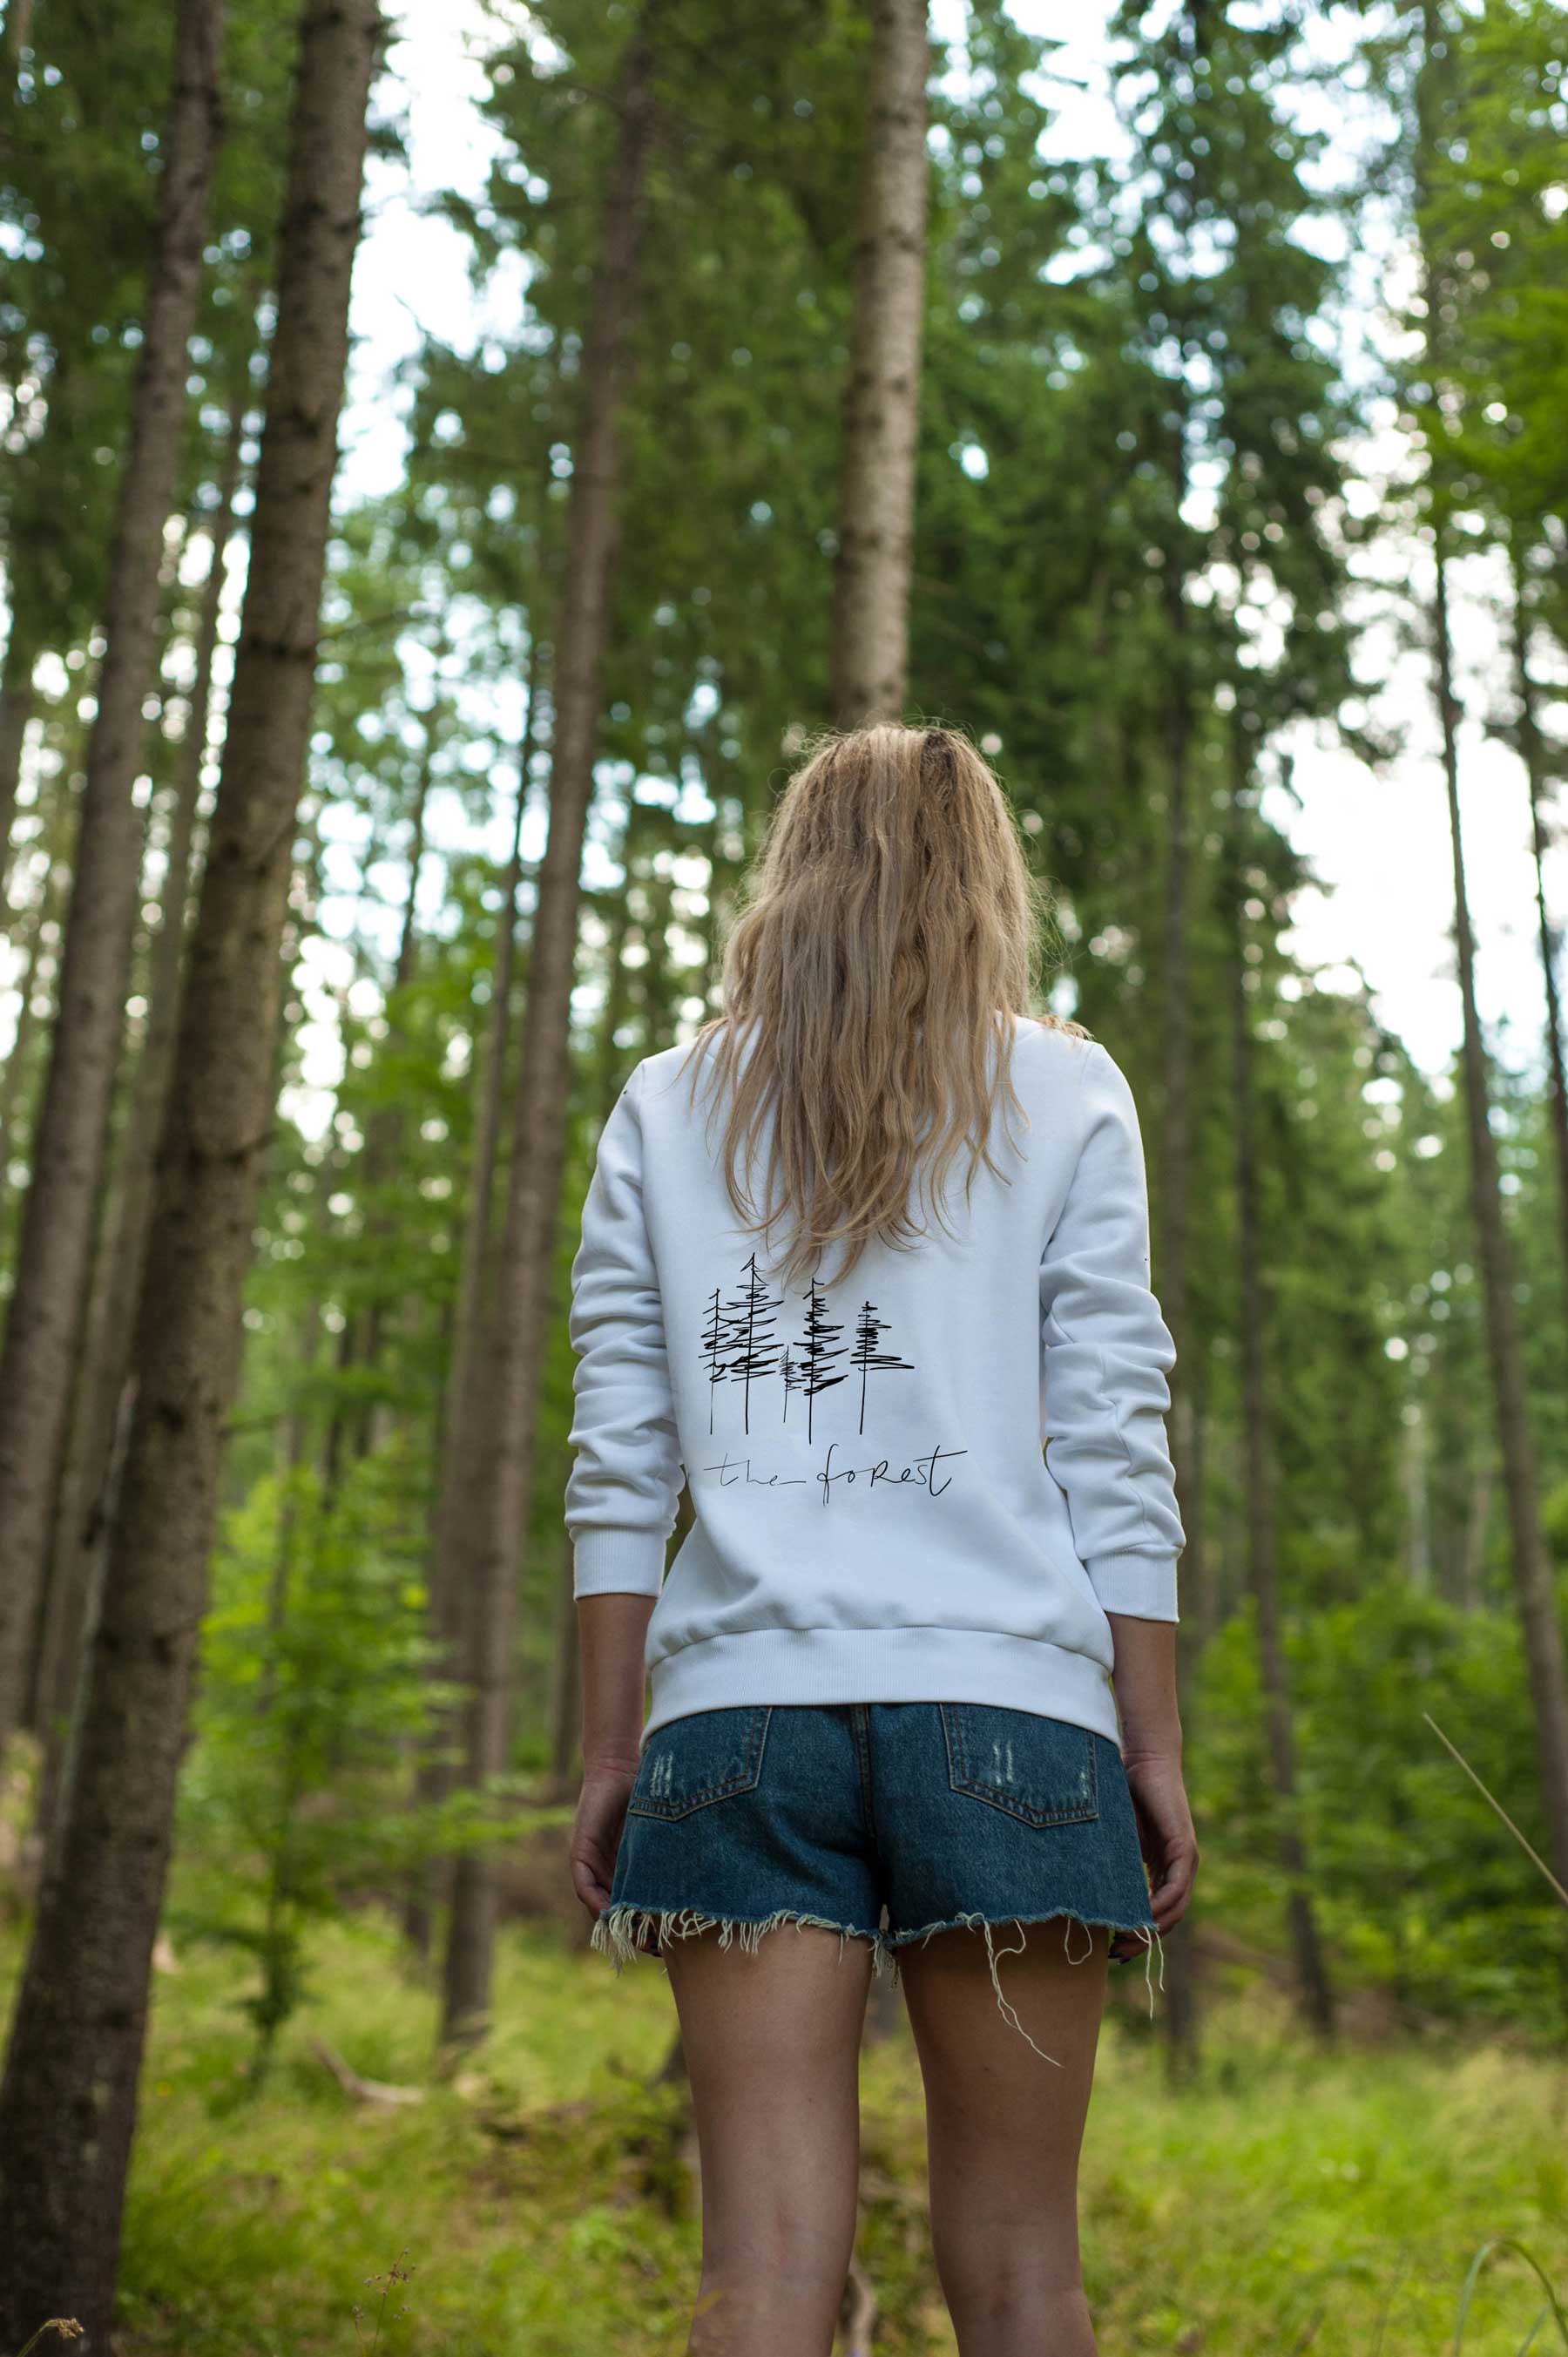 THE FOREST Sweatshirt